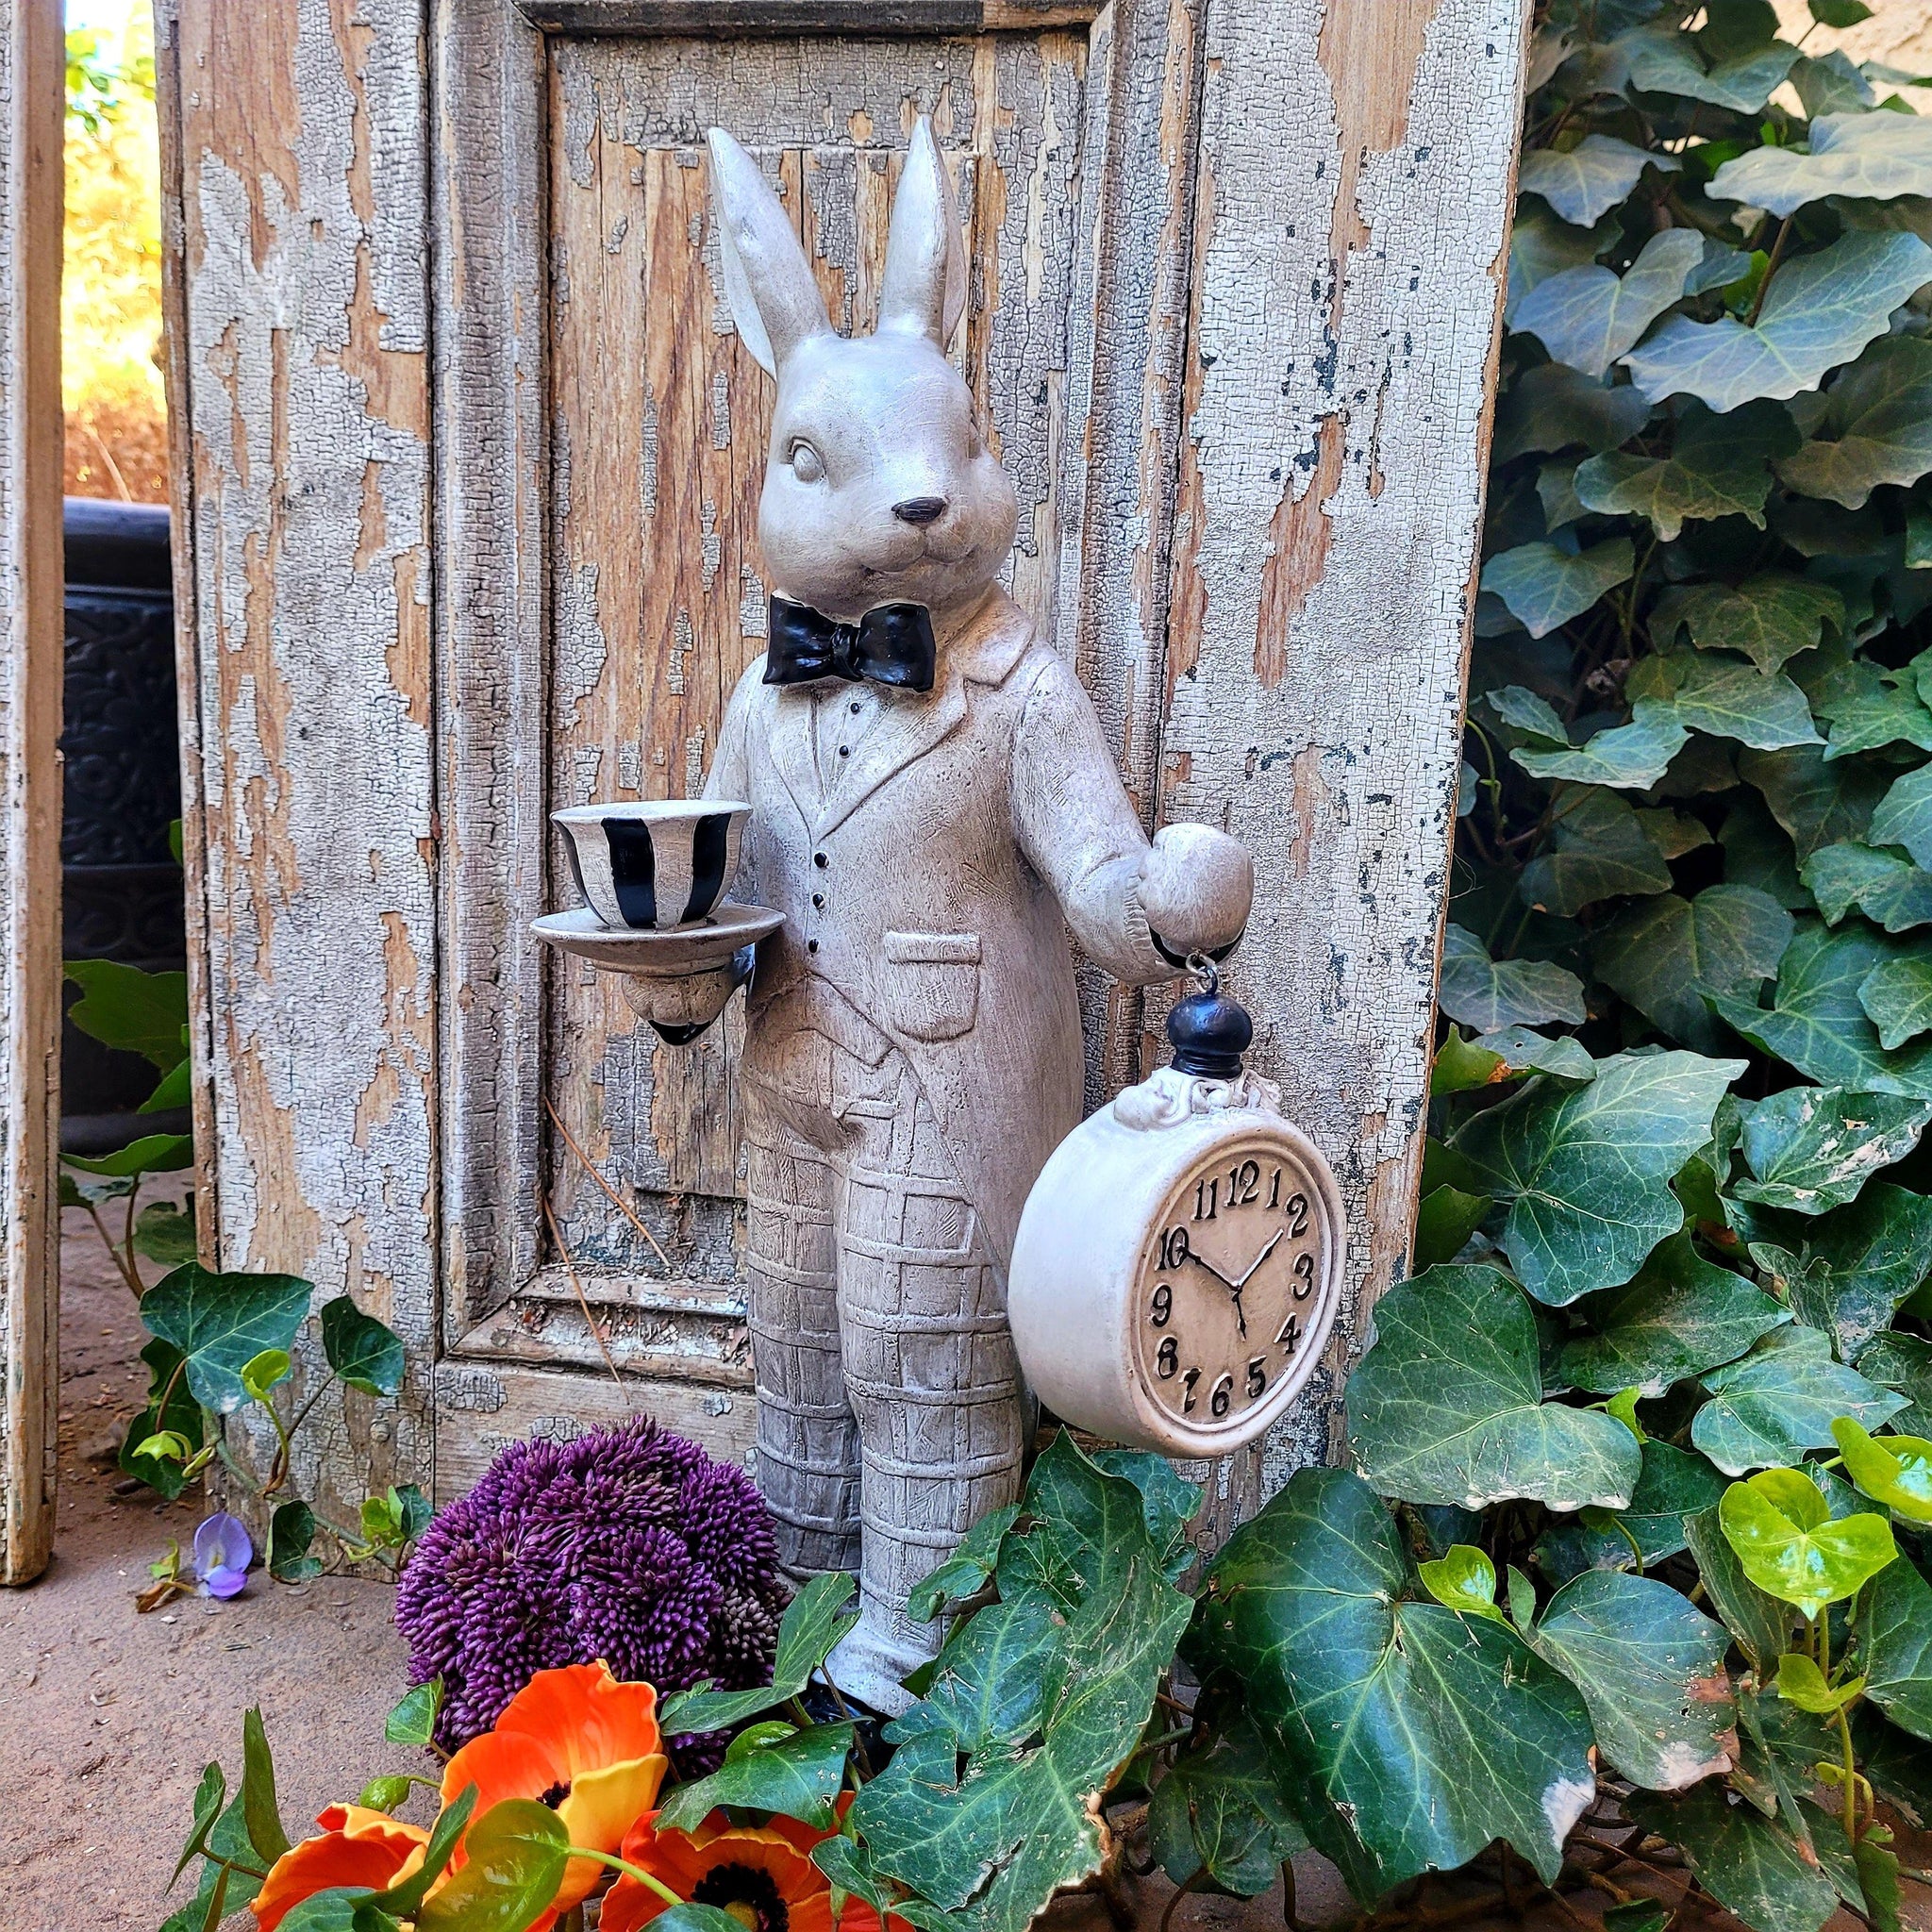 Rustic Resin Tall Garden Bunny Rabbit Figurine Statue 24